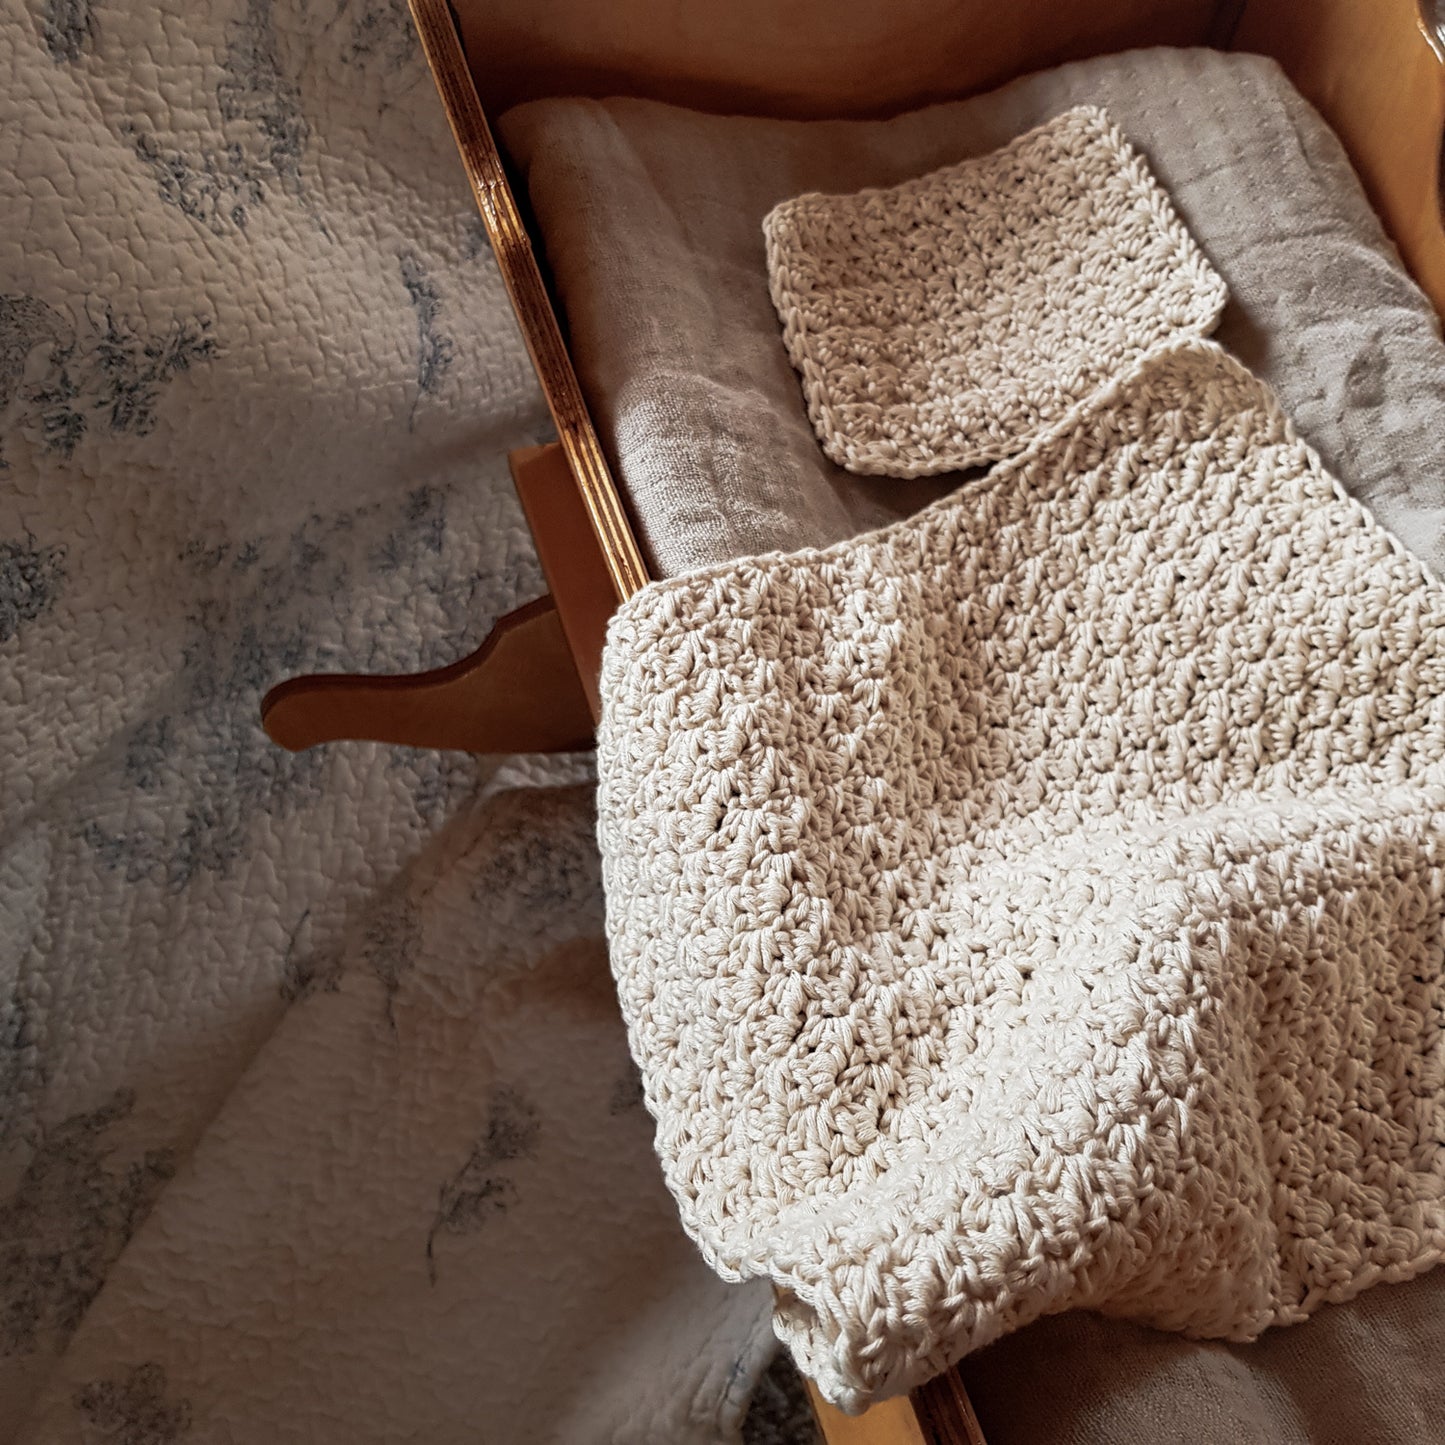 Pillow + Blanket bedding set for baby doll, natural white